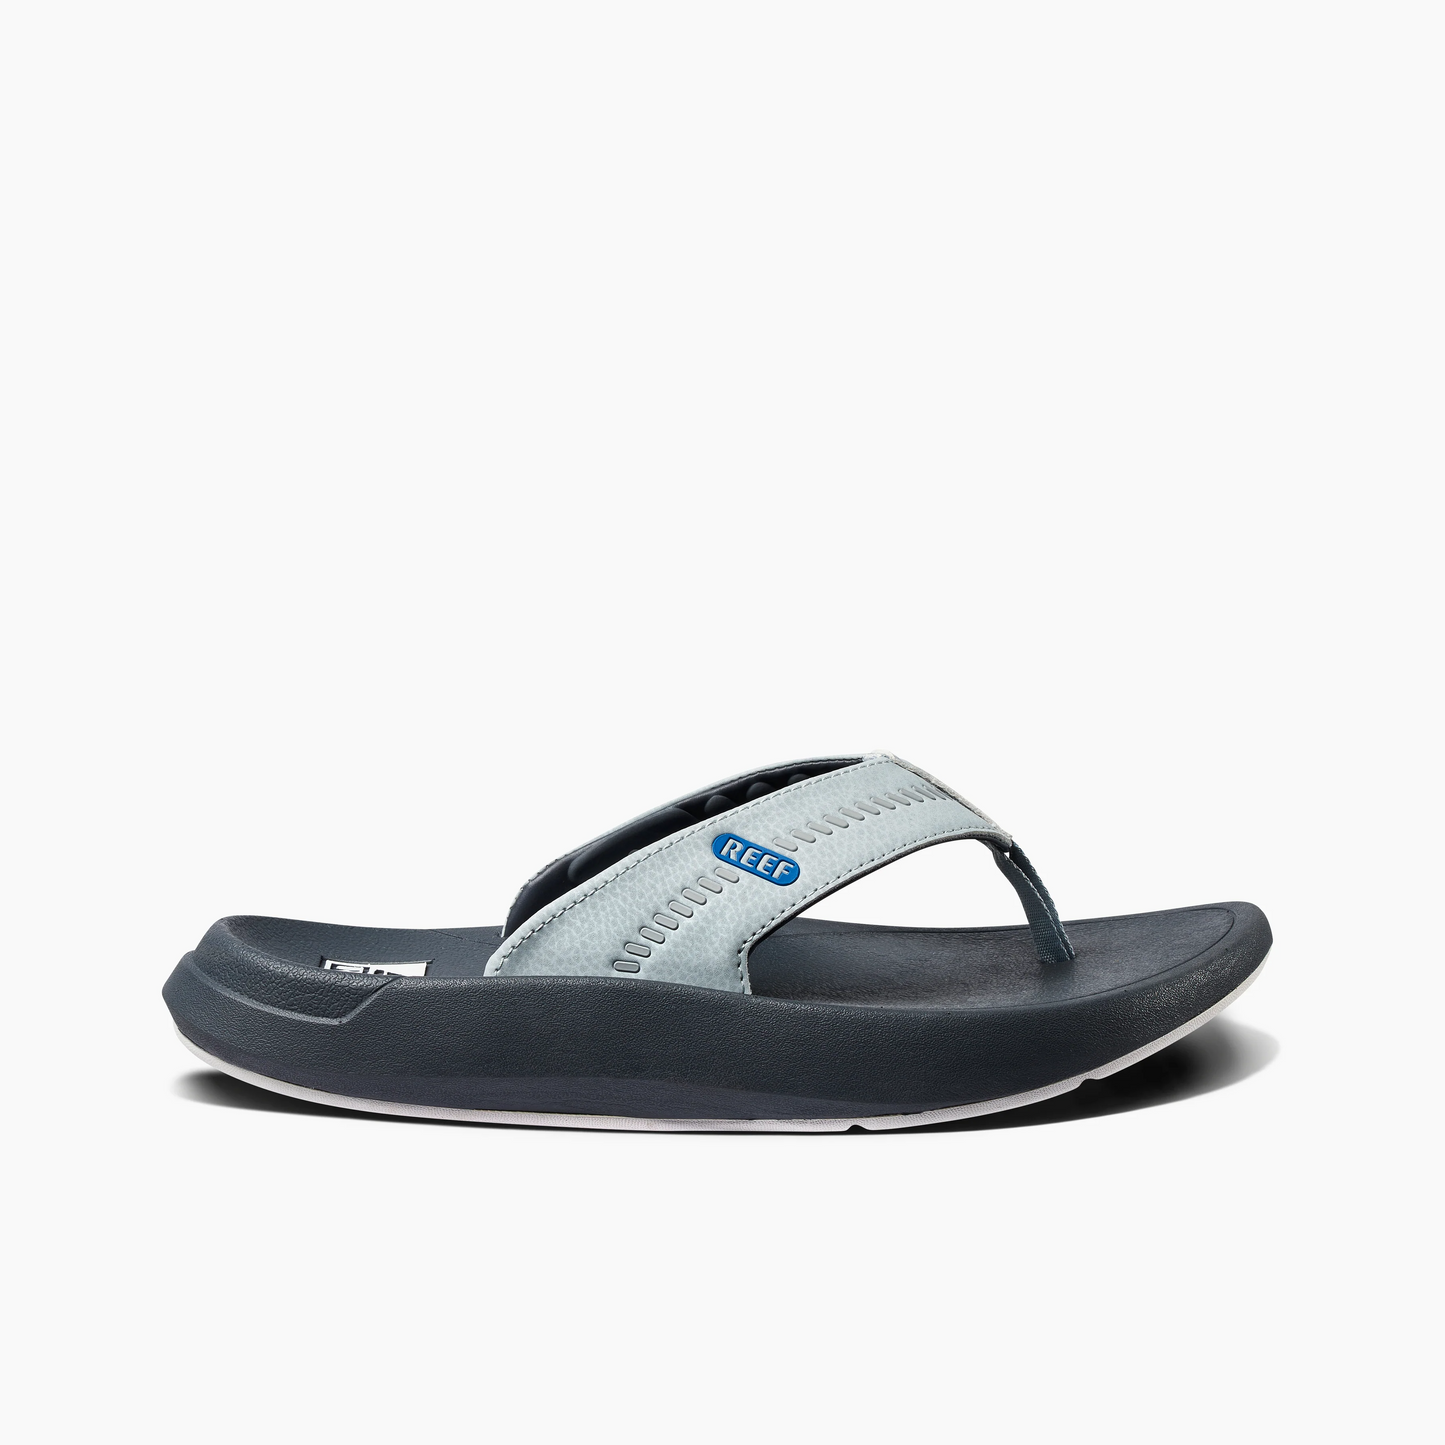 Reef Men's Swellsole Cruiser Sandals